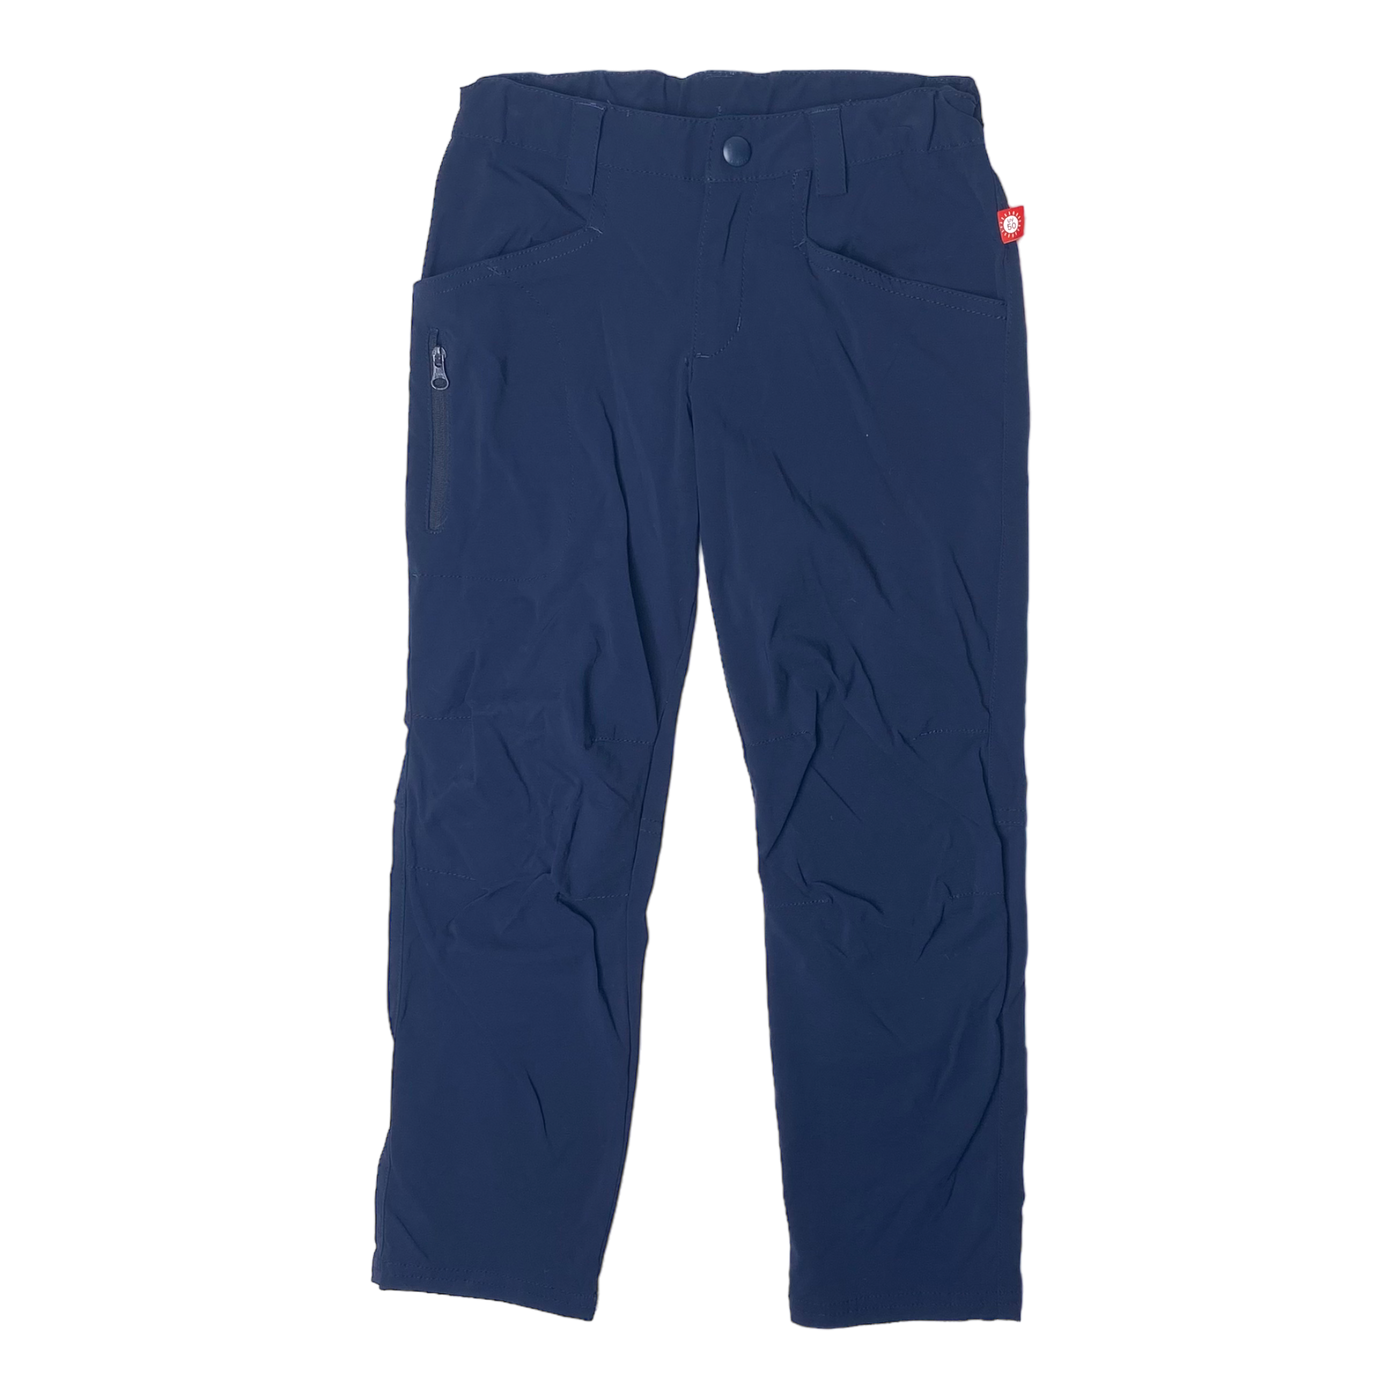 Reima reimago midseason pants, midnight blue | 122cm